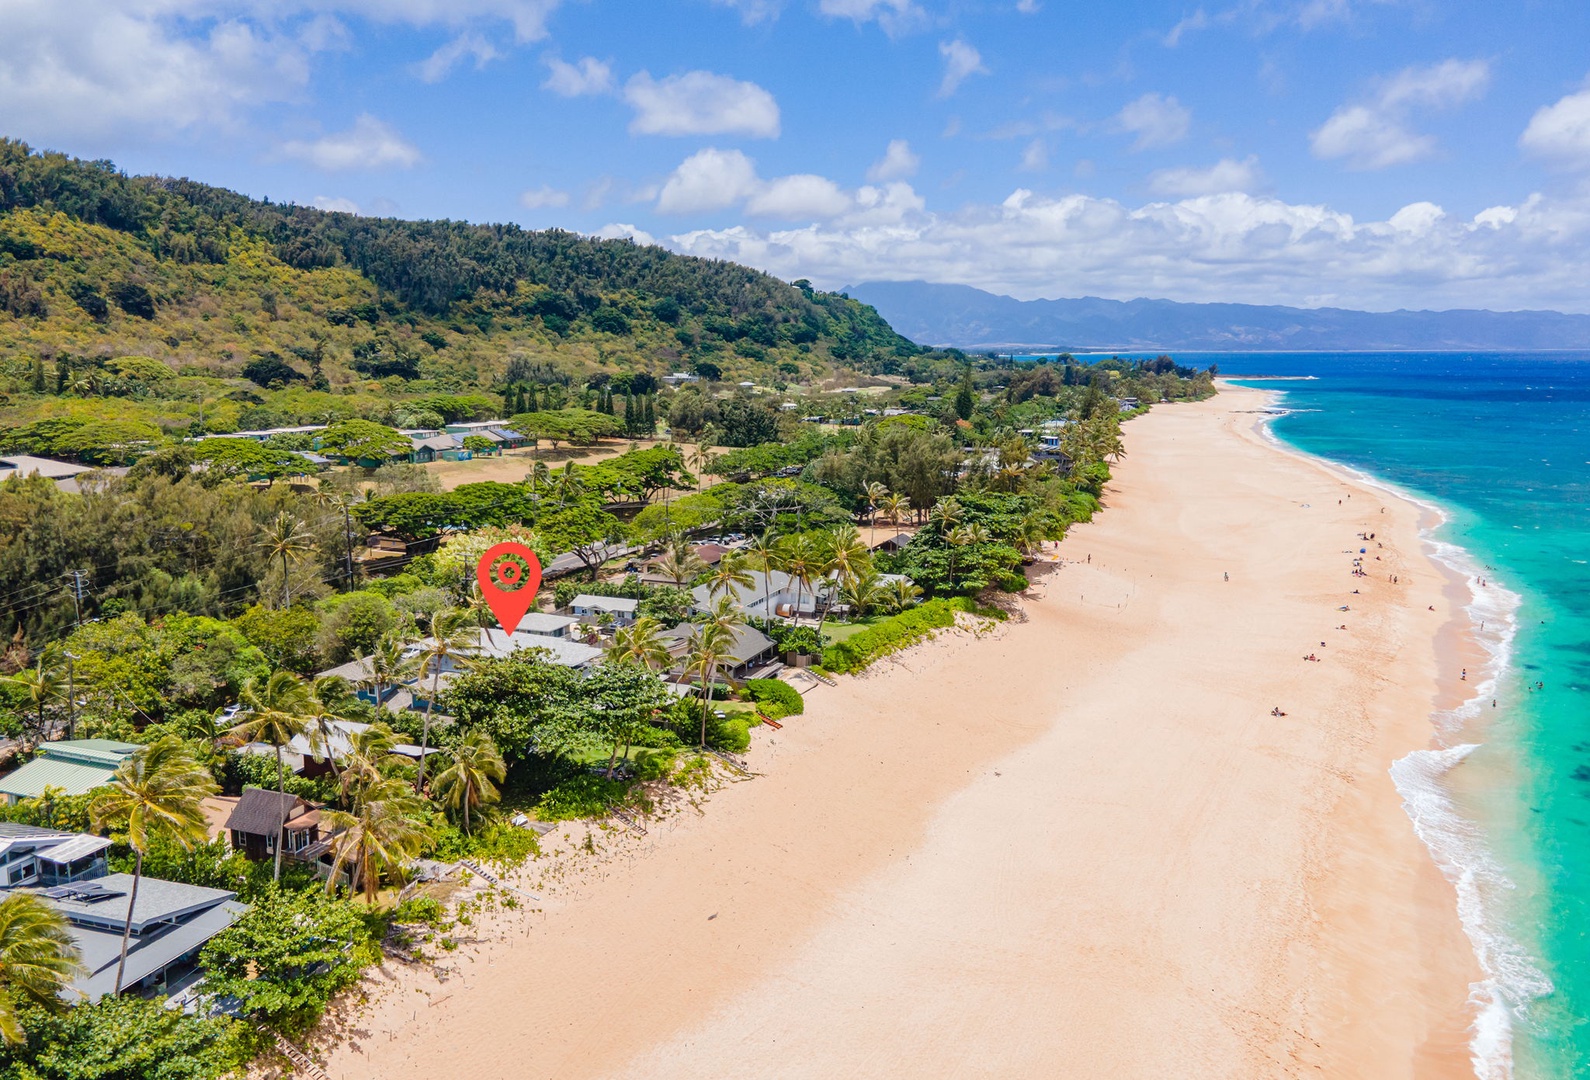 Haleiwa Vacation Rentals, Hale Nalu - Imagine having this beach as your backyard